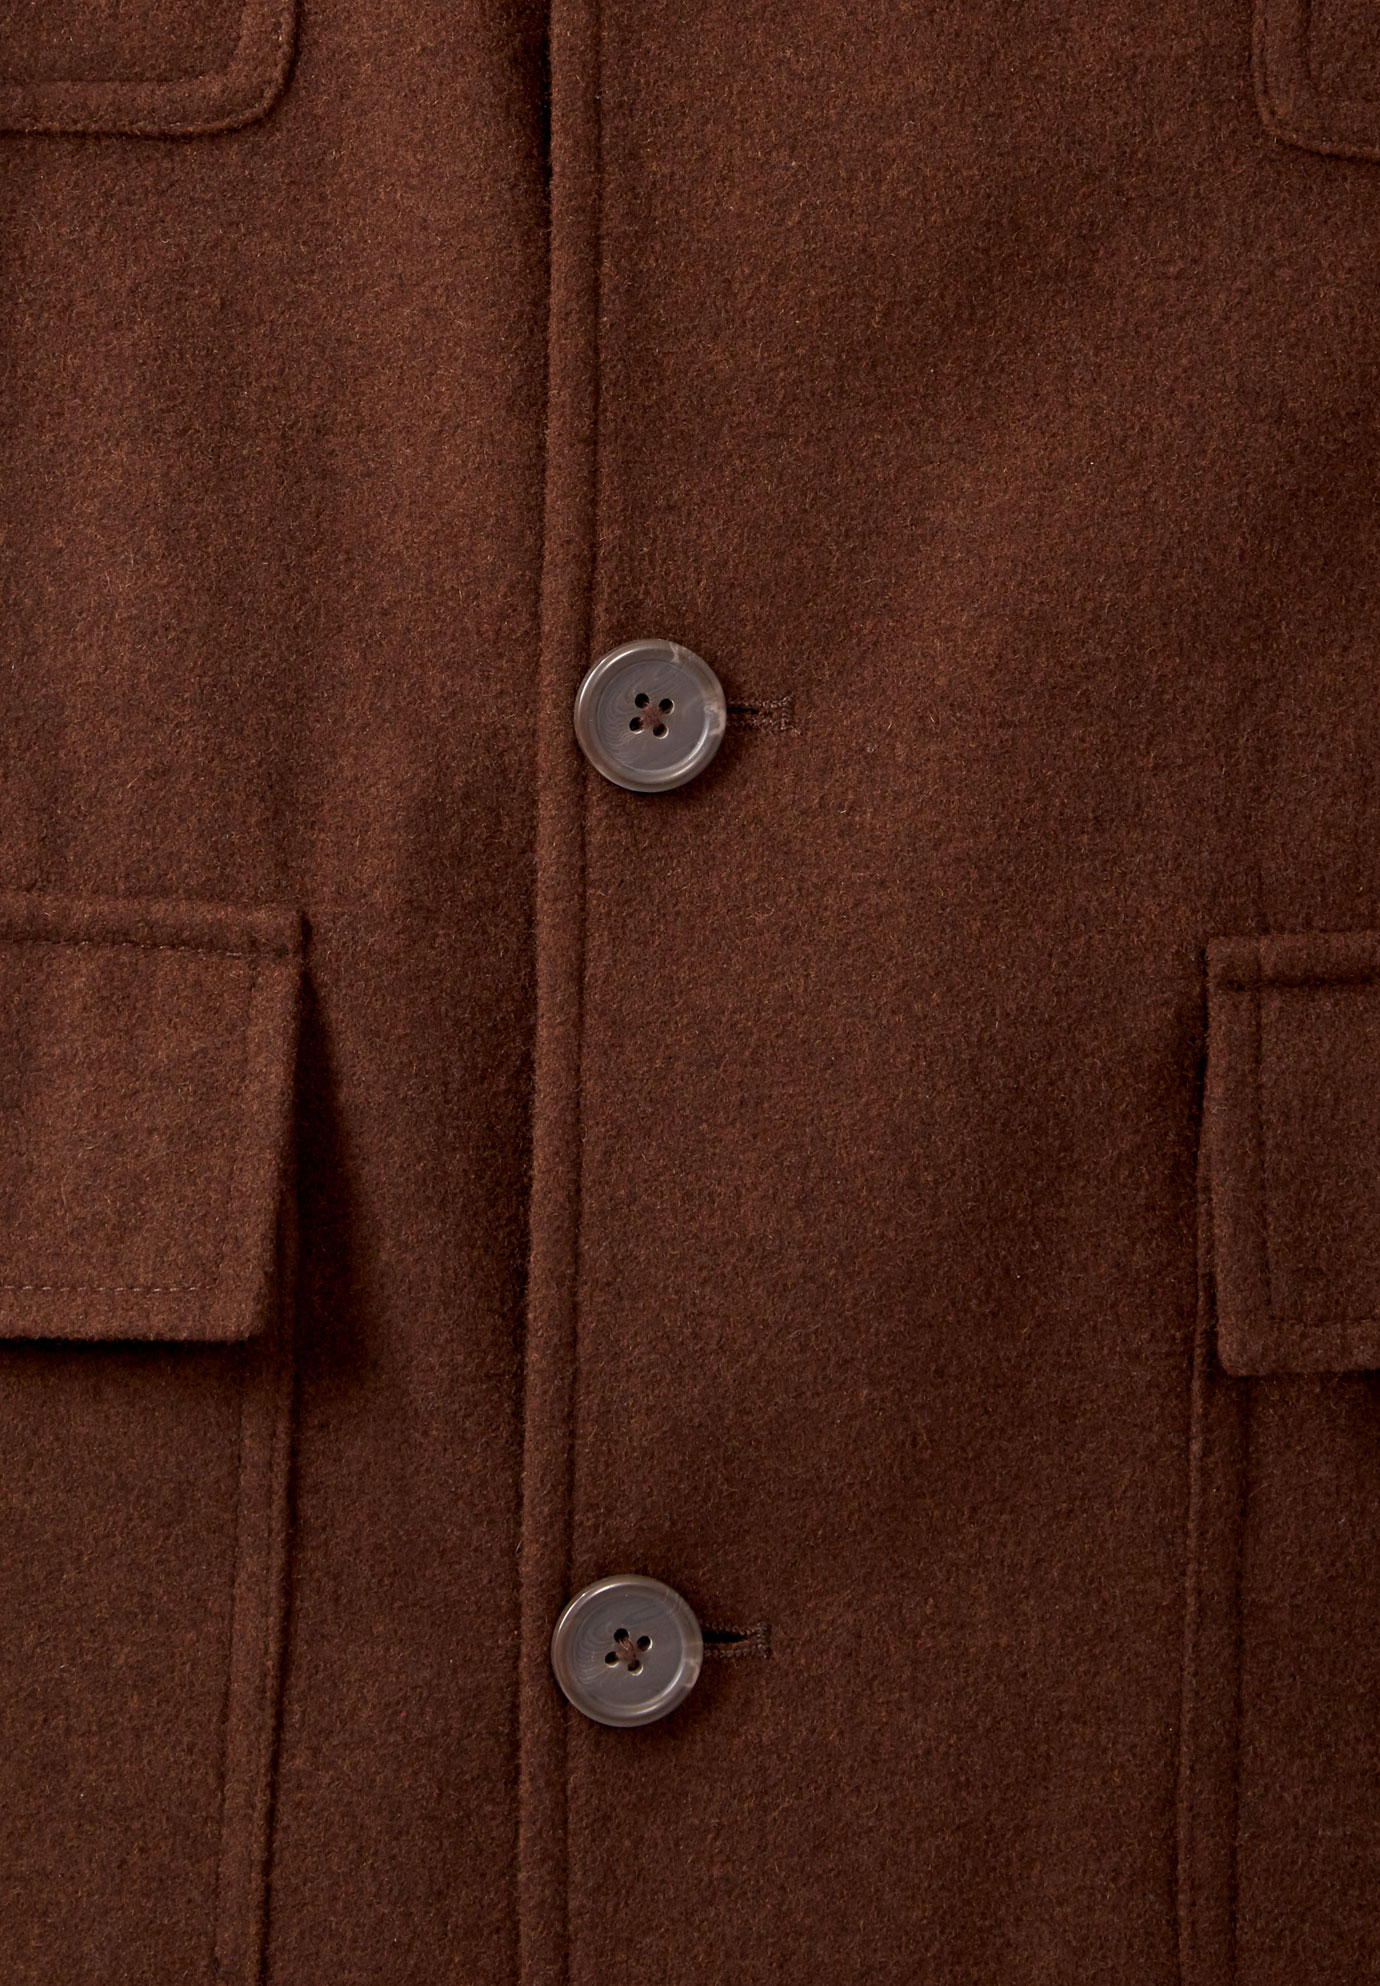 Kingsize Men's Big & Tall Multi-Pocket Inset Jacket Coat - image 4 of 5